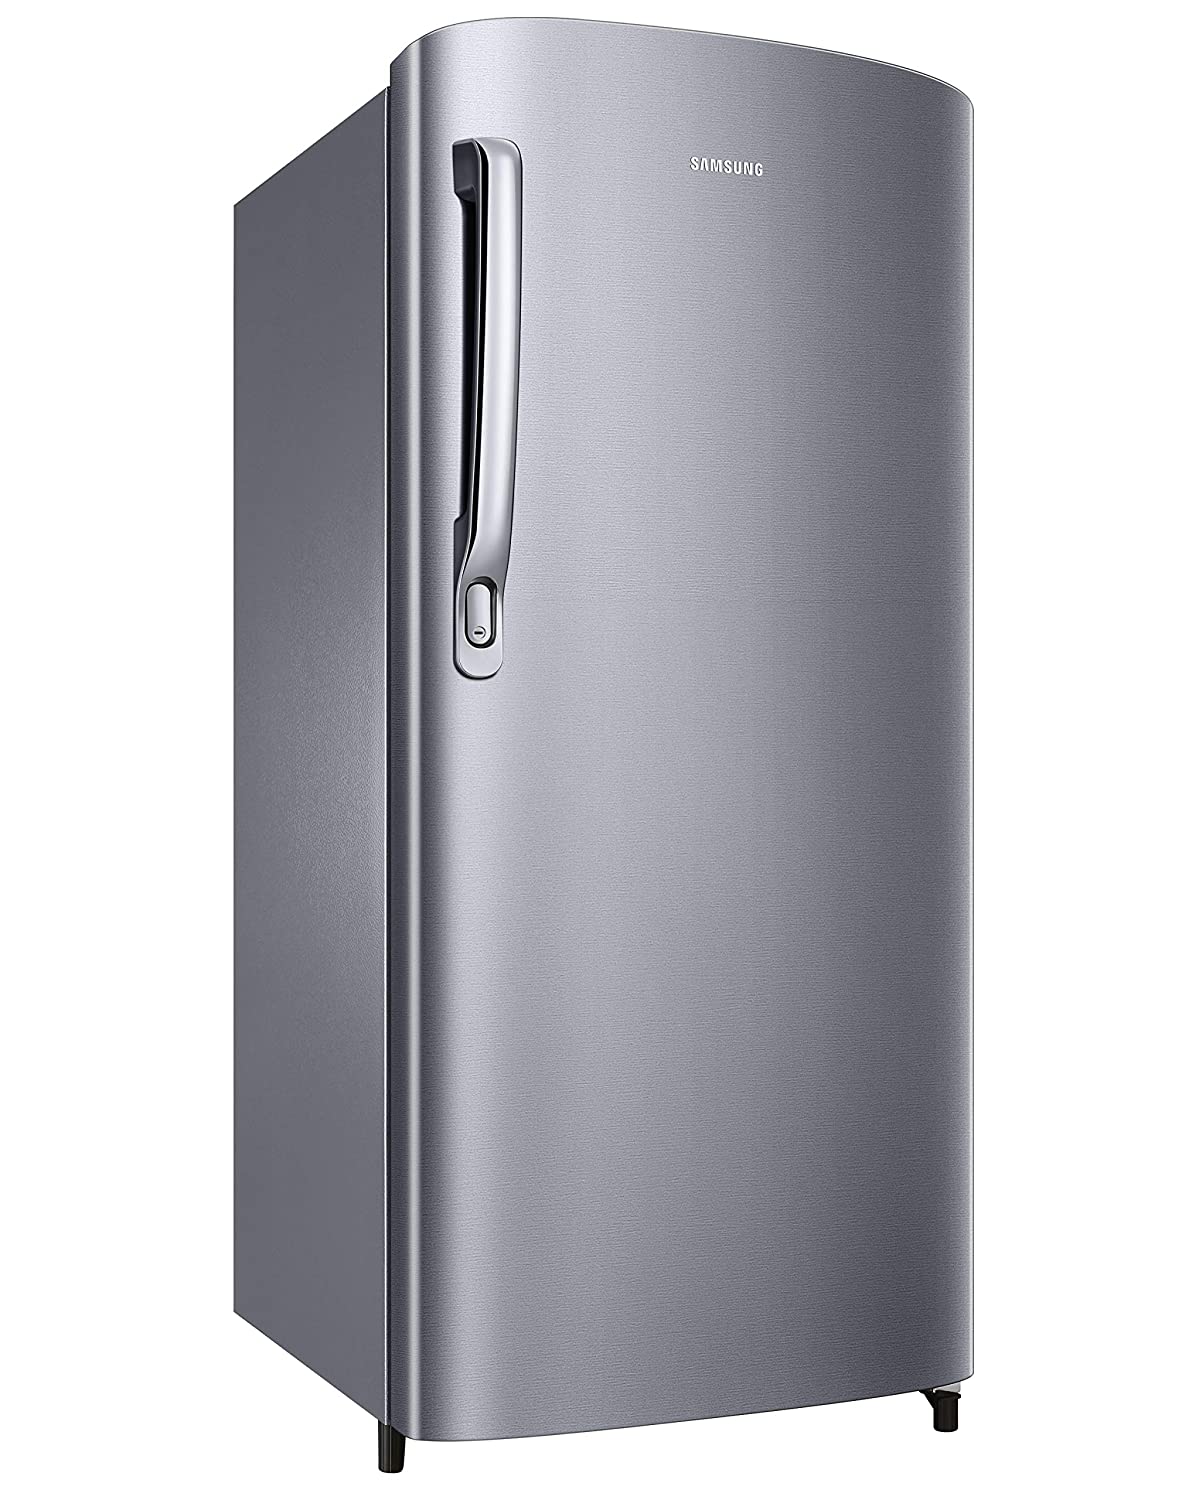 Samsung 192 L 2 Star Direct Cool Single Door Refrigerator (RR19A241BGS/NL, Grey Silver)